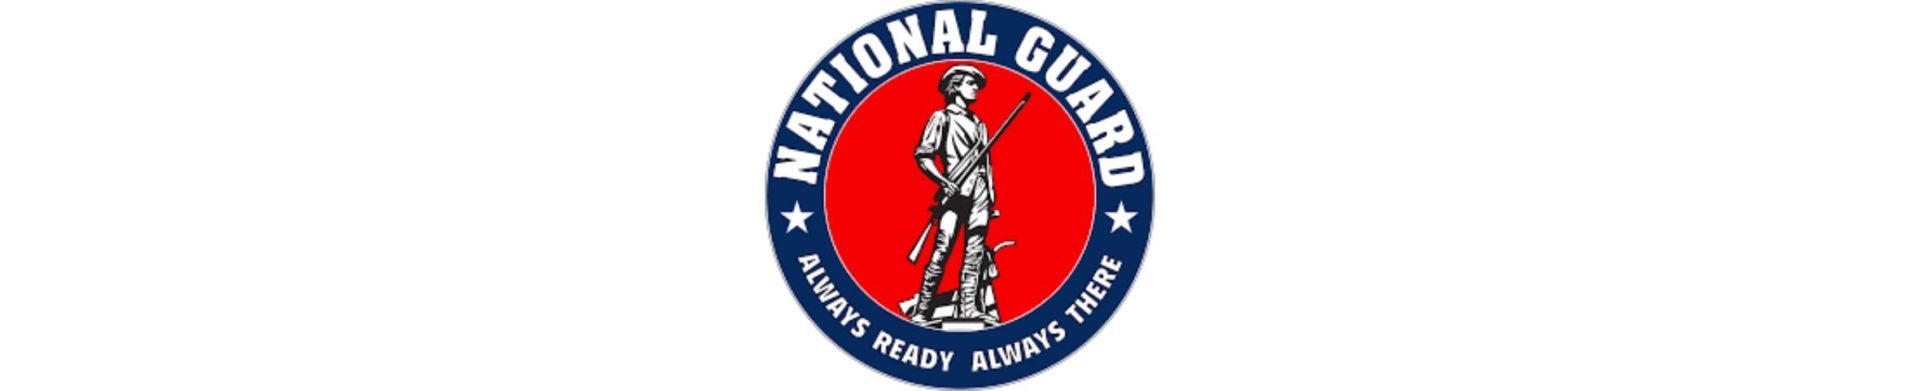 the US National Guard logo